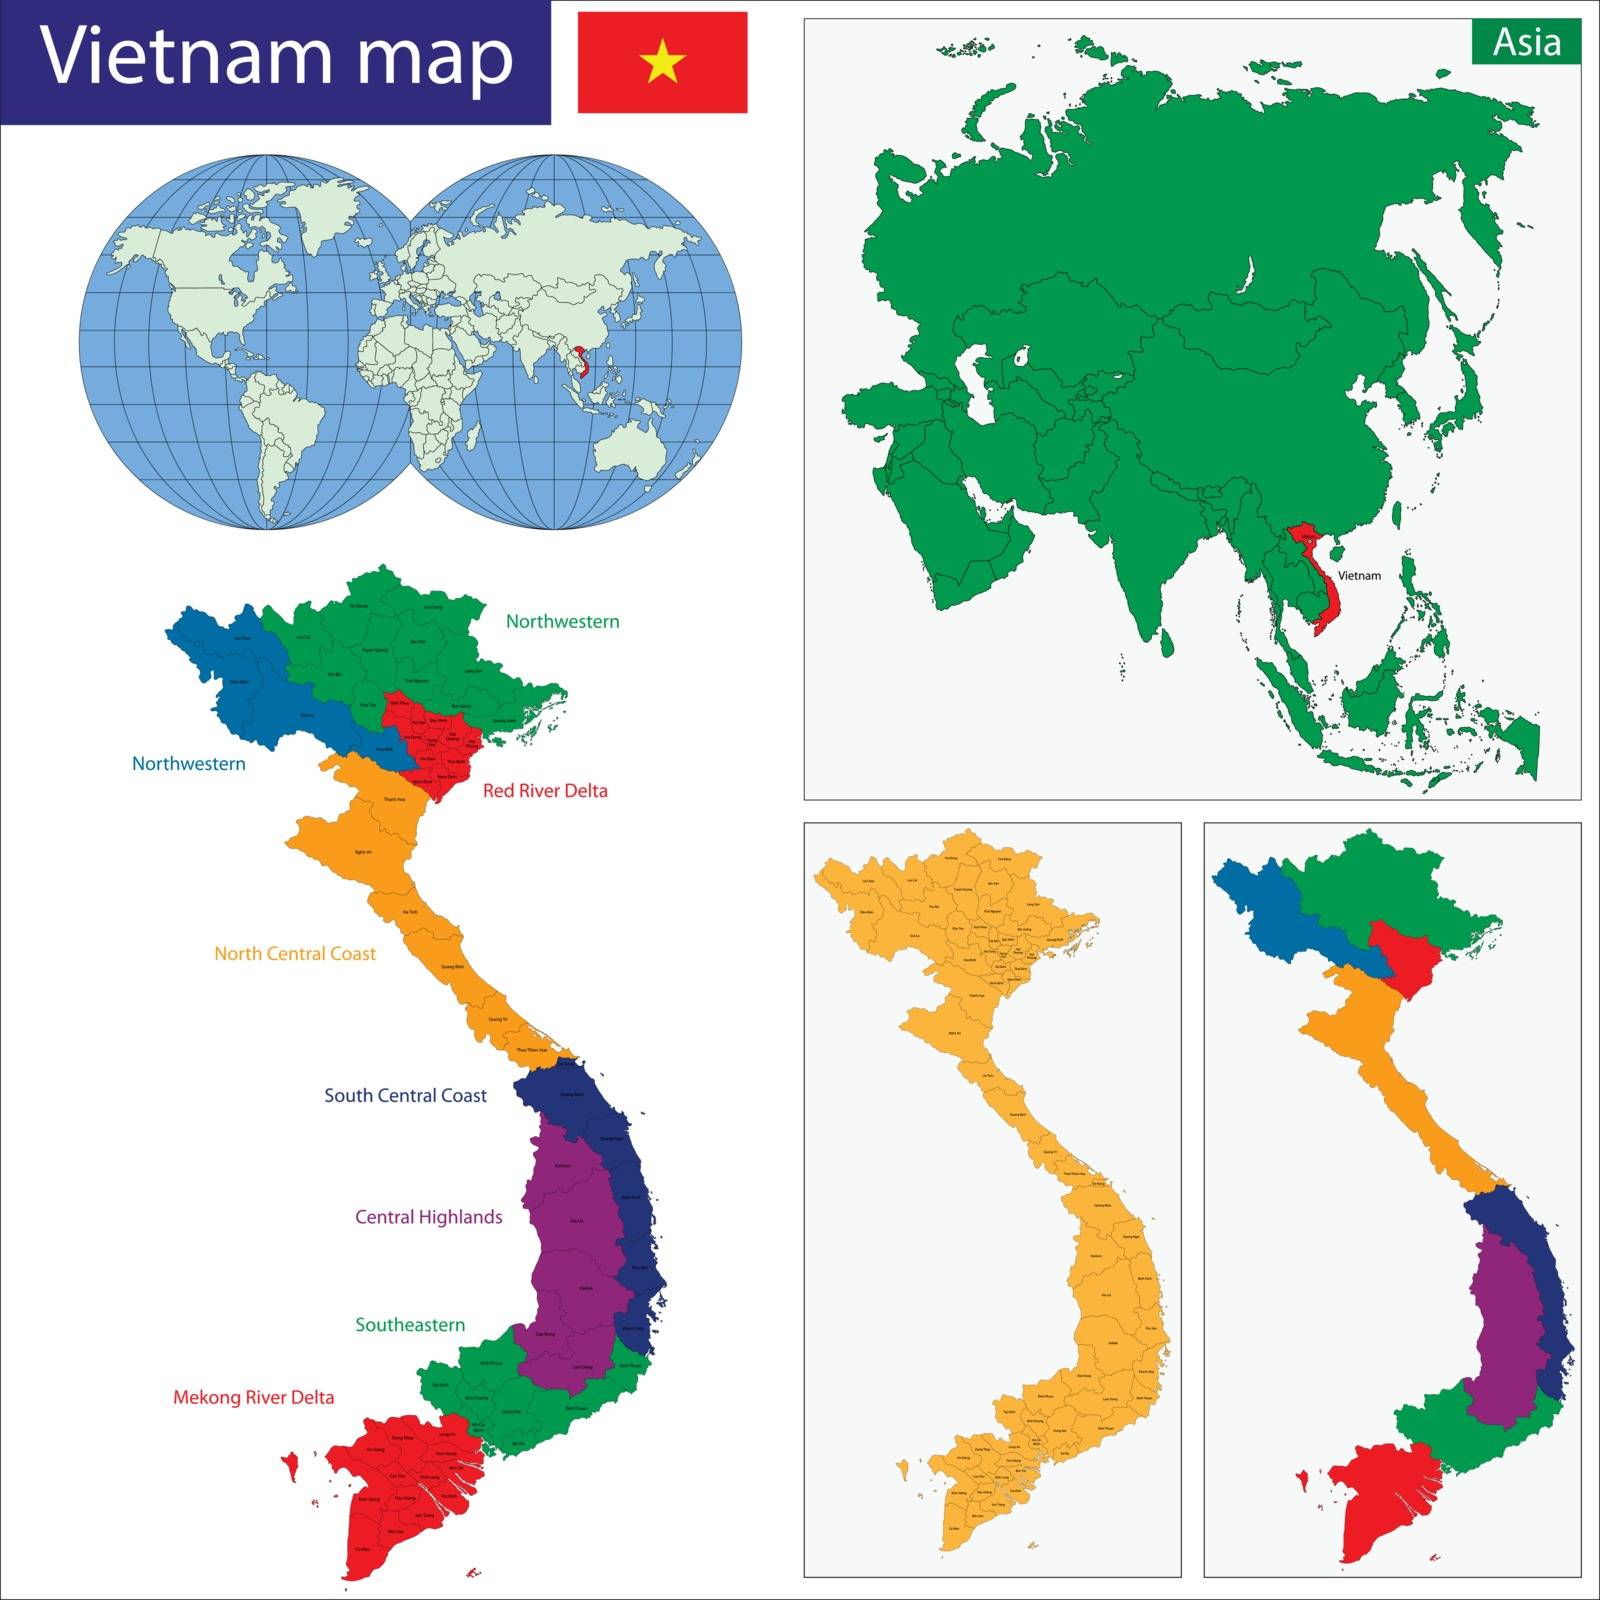 Vietnam map by Volina